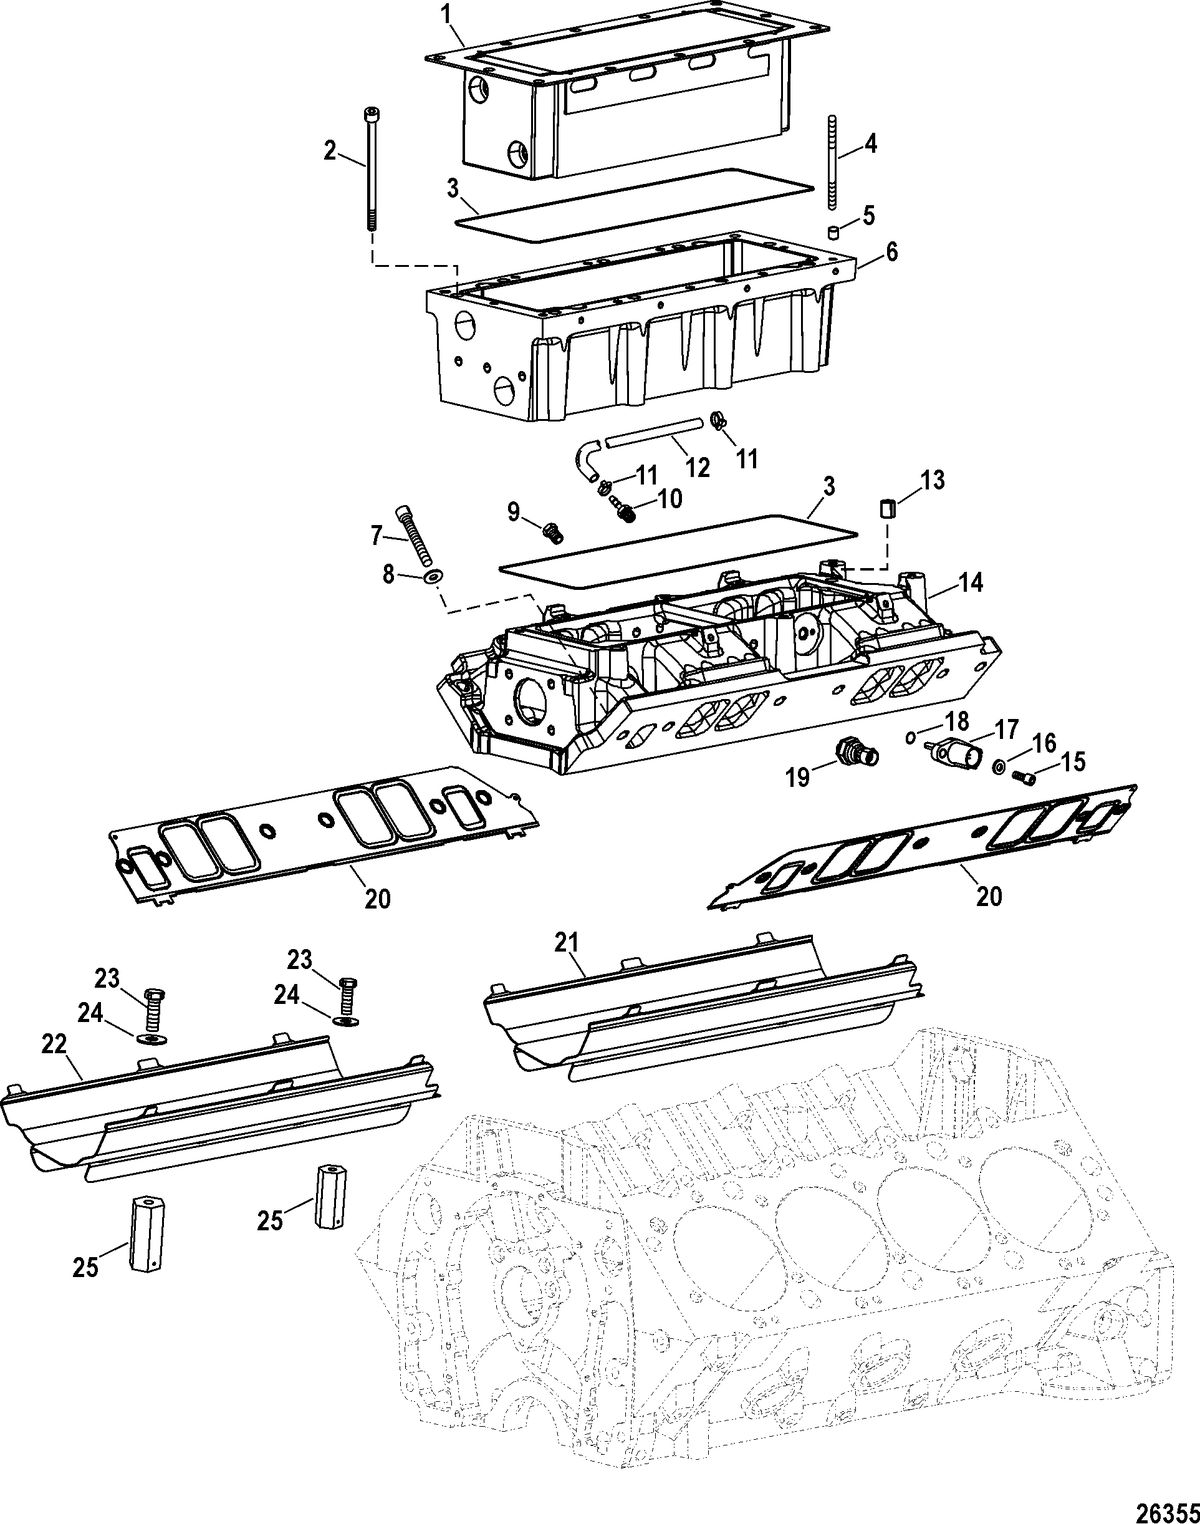 RACE STERNDRIVE 1075 SCI Intake Components(Manifold)